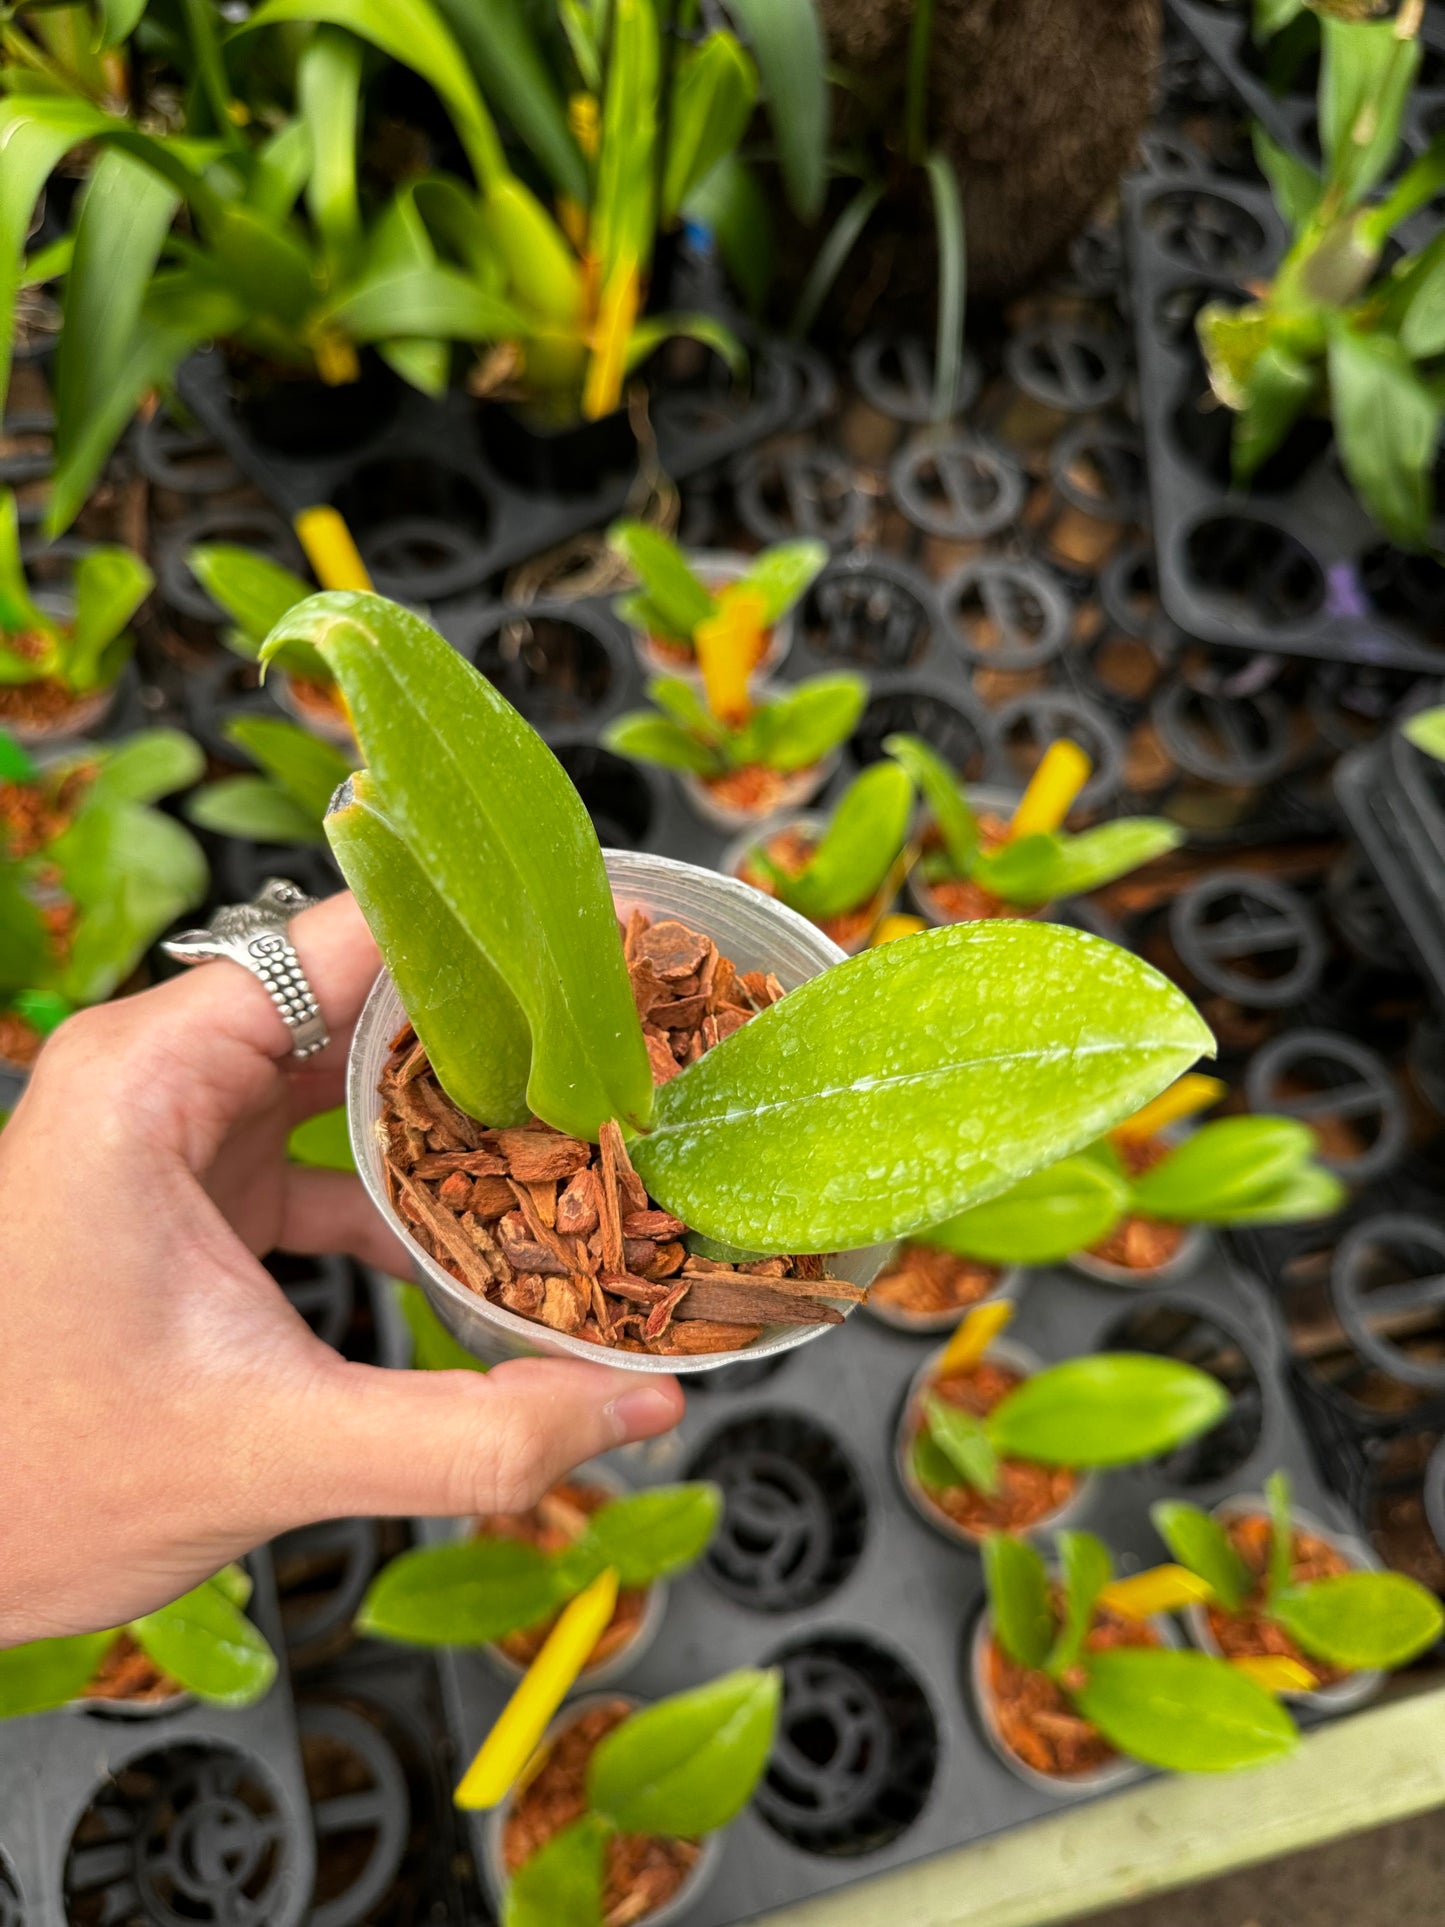 Phalaenopsis maculata